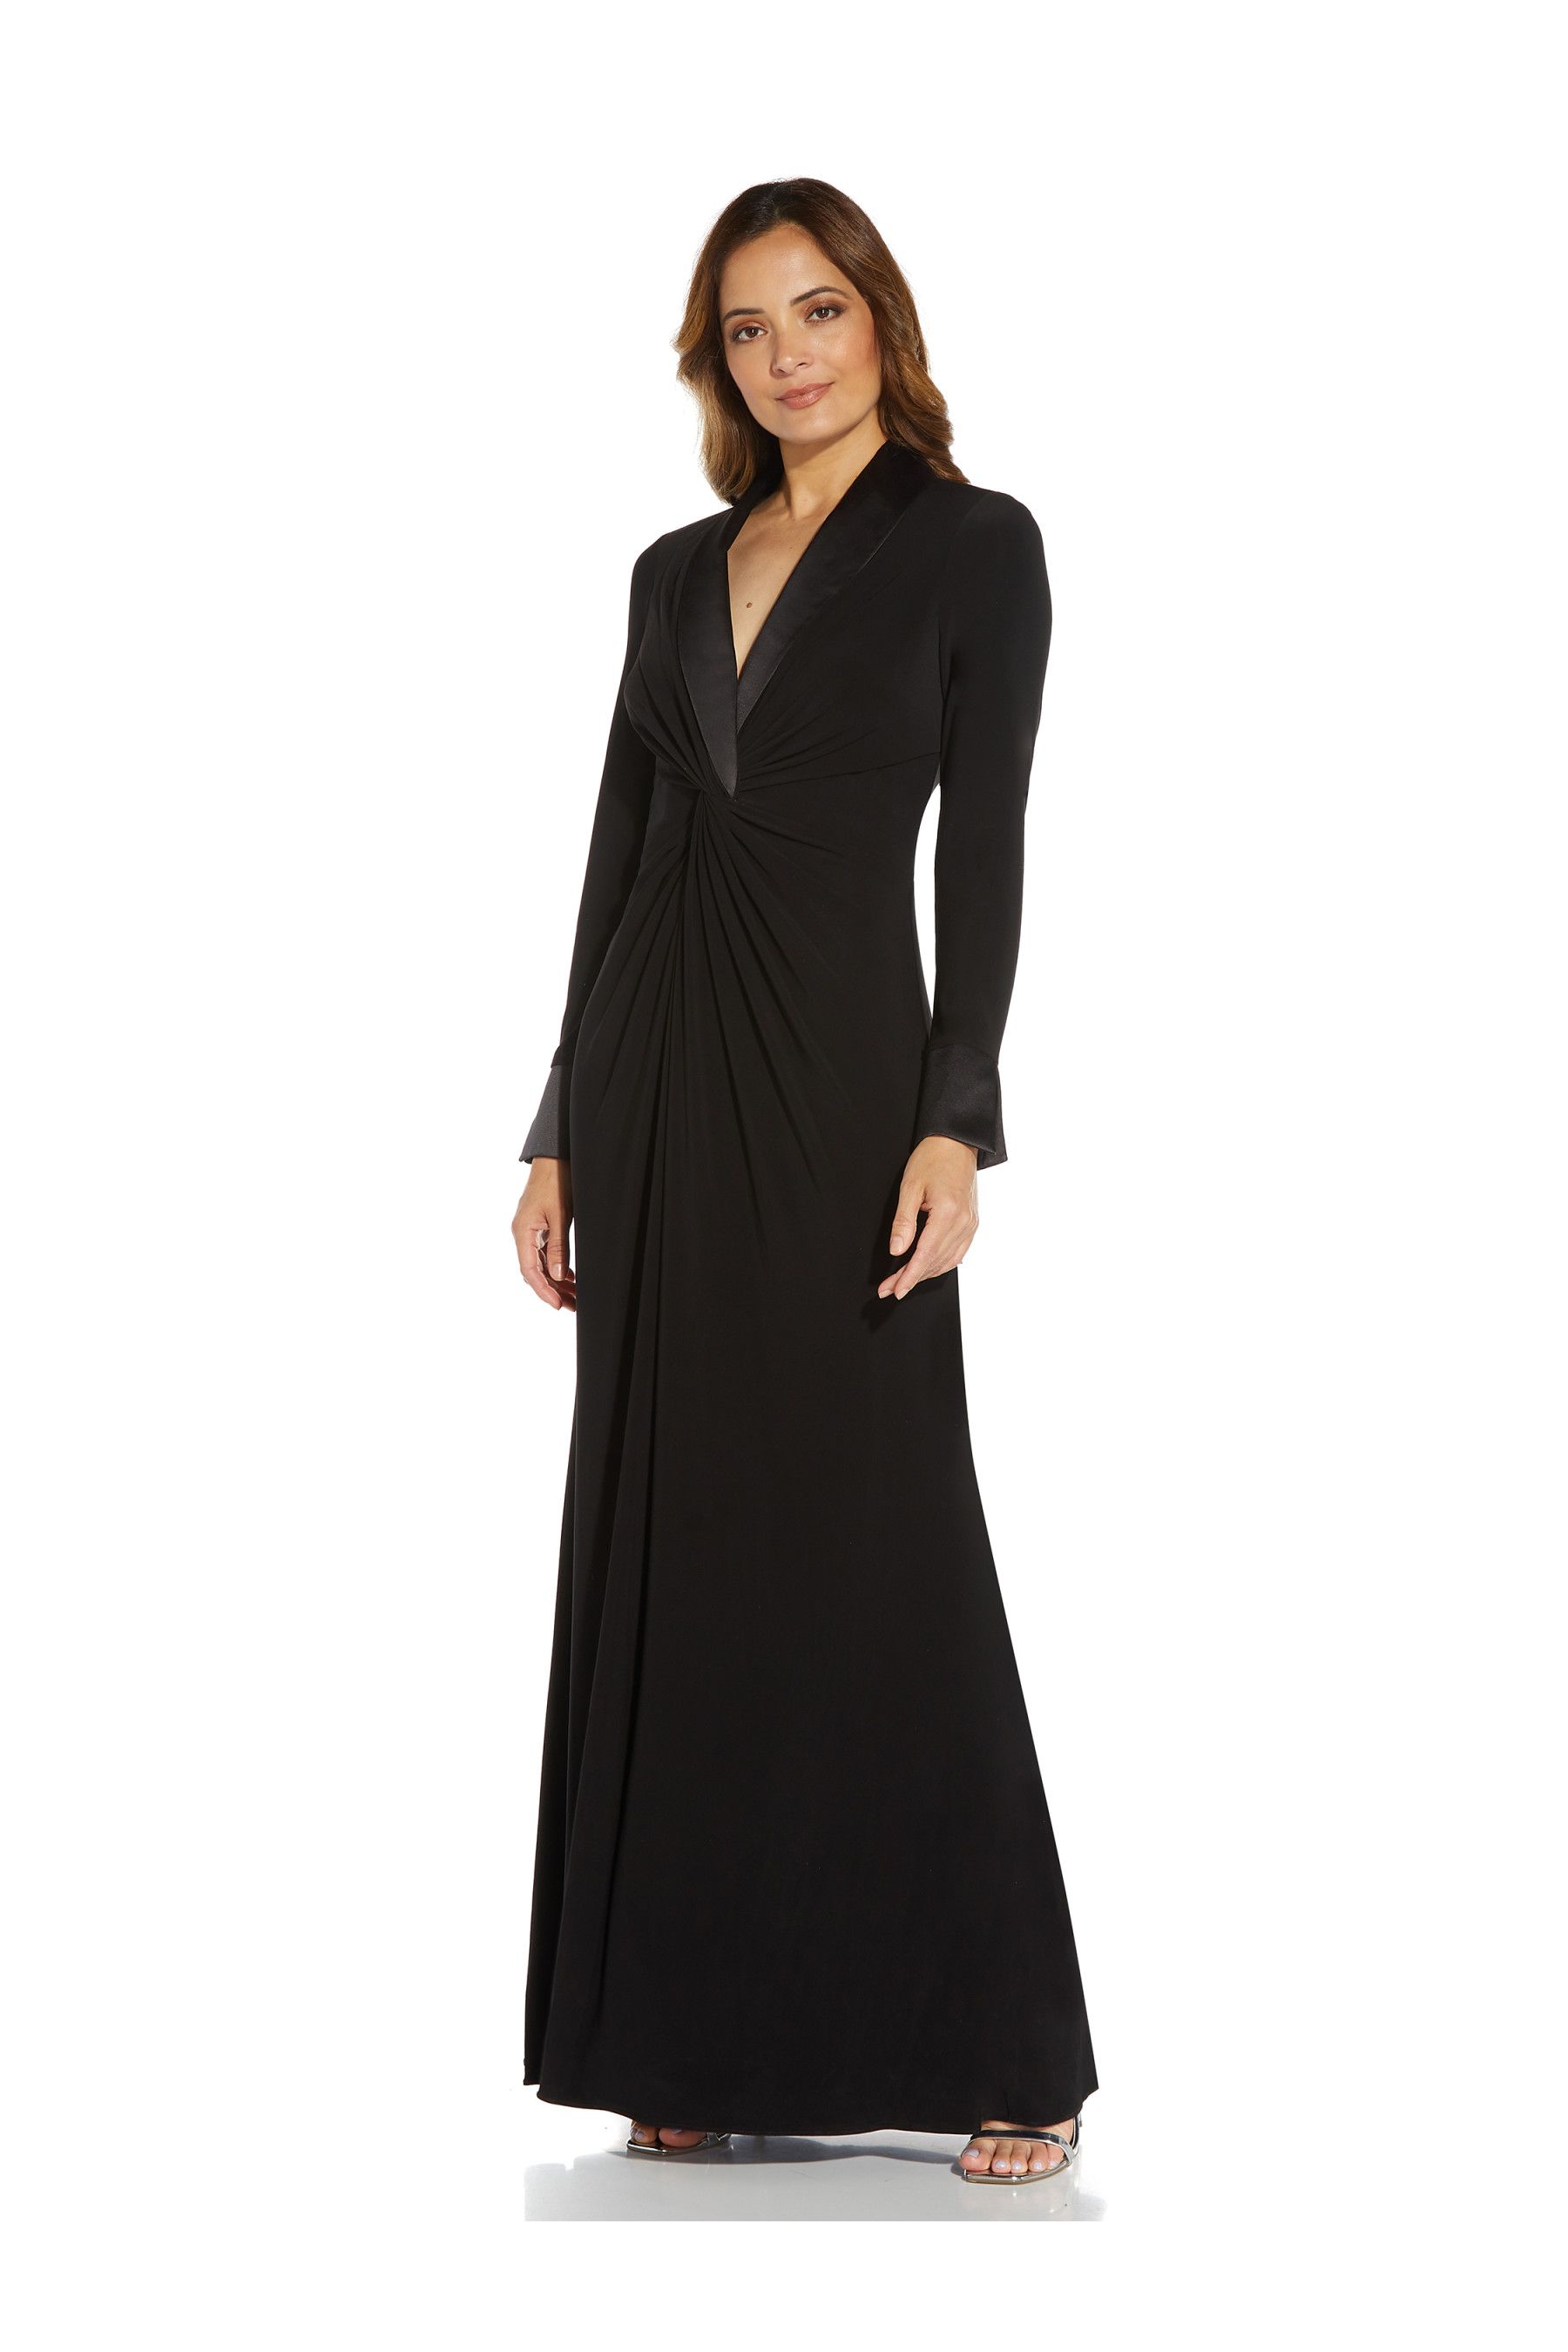 Buy Adrianna Papell Black Jersey Twist Tuxedo Gown from Next Australia